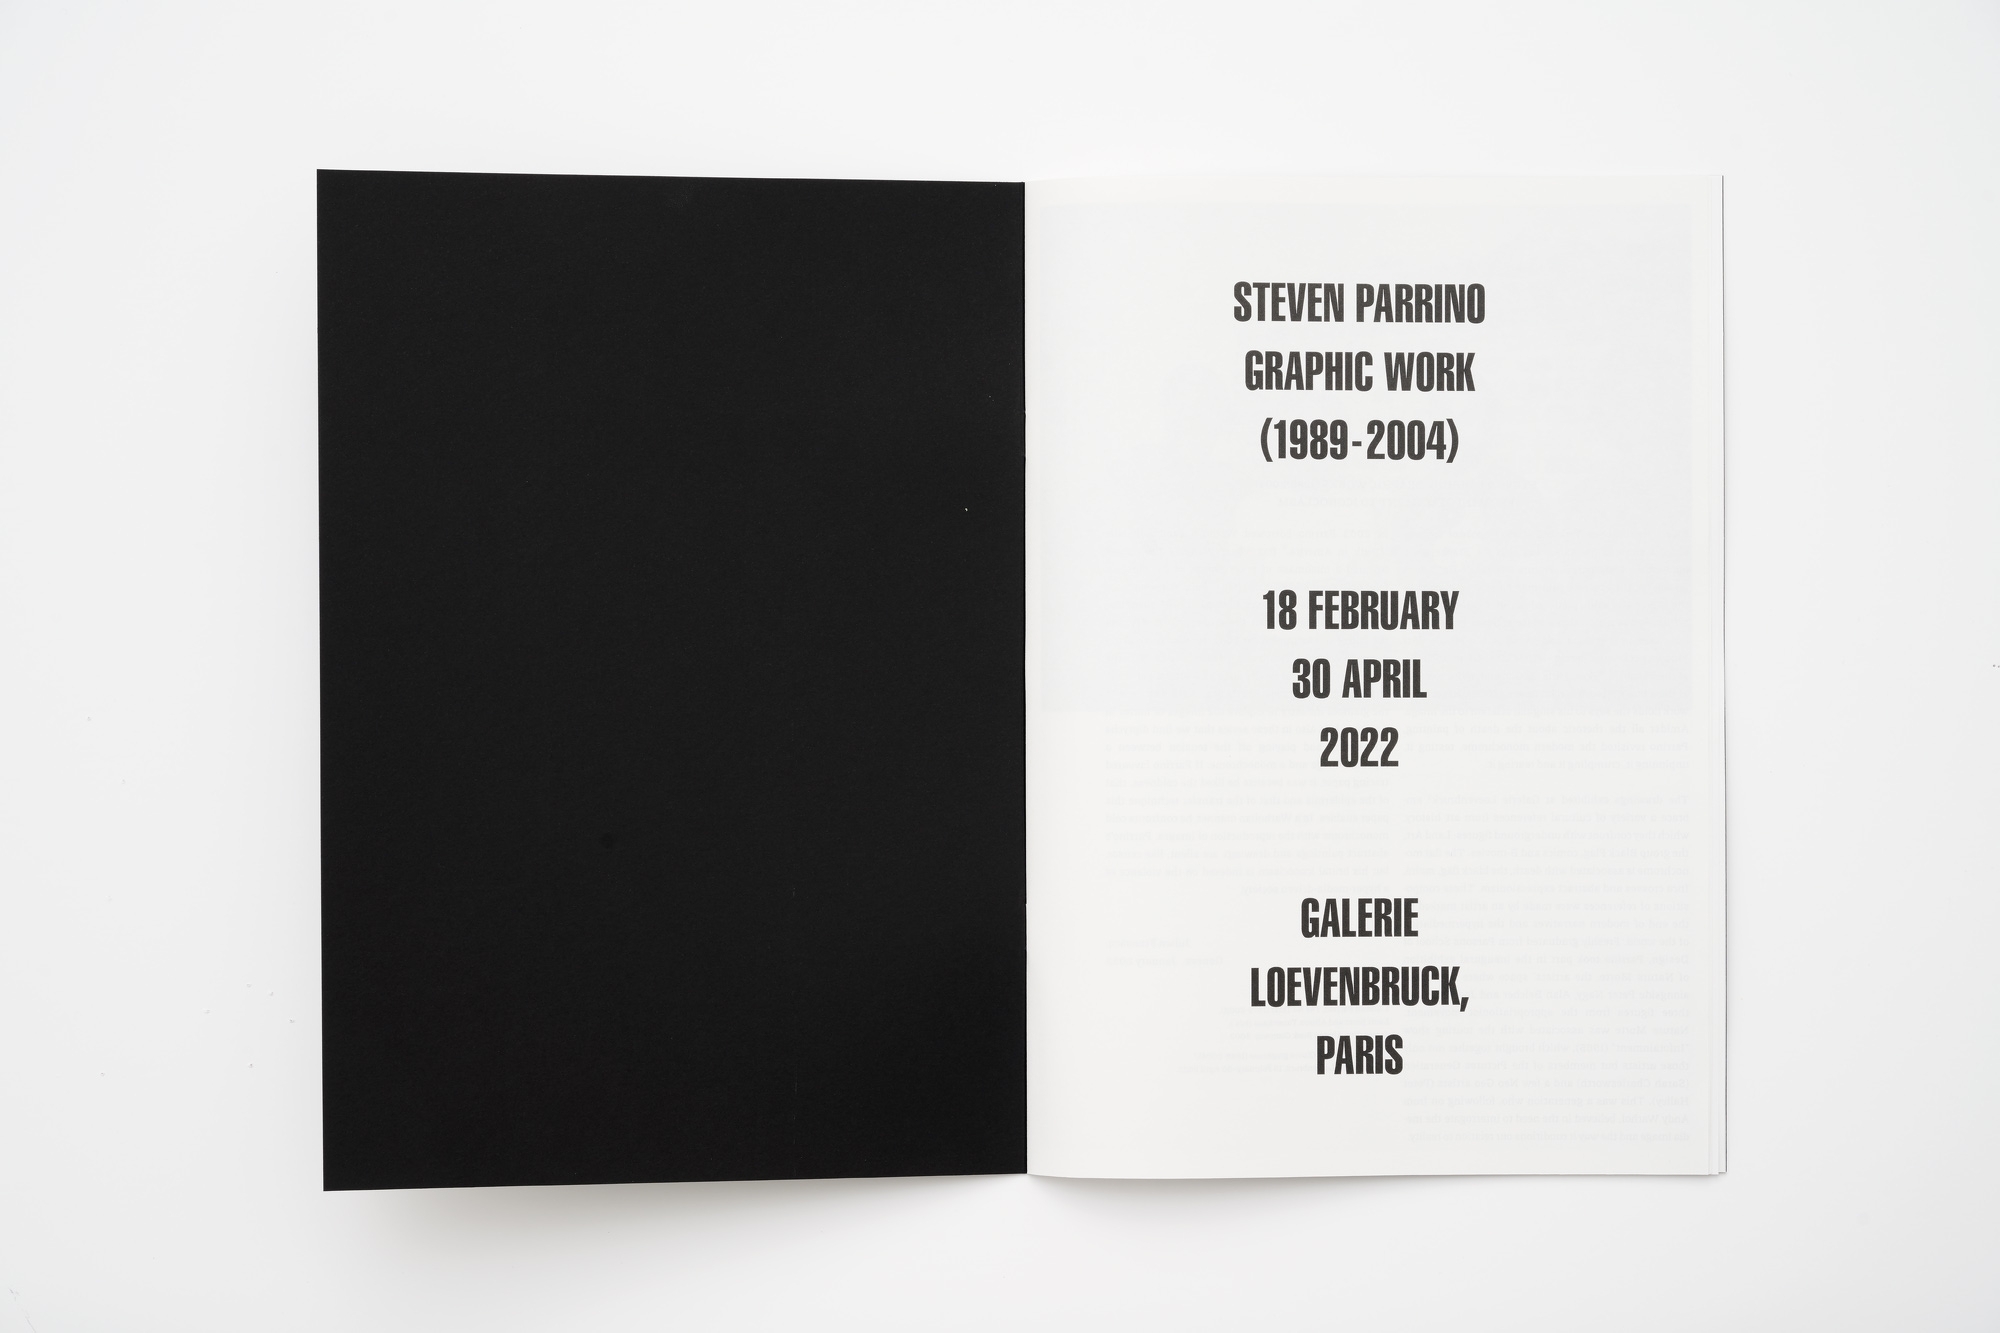 Steven Parrino: Graphic Work (1989-2004)